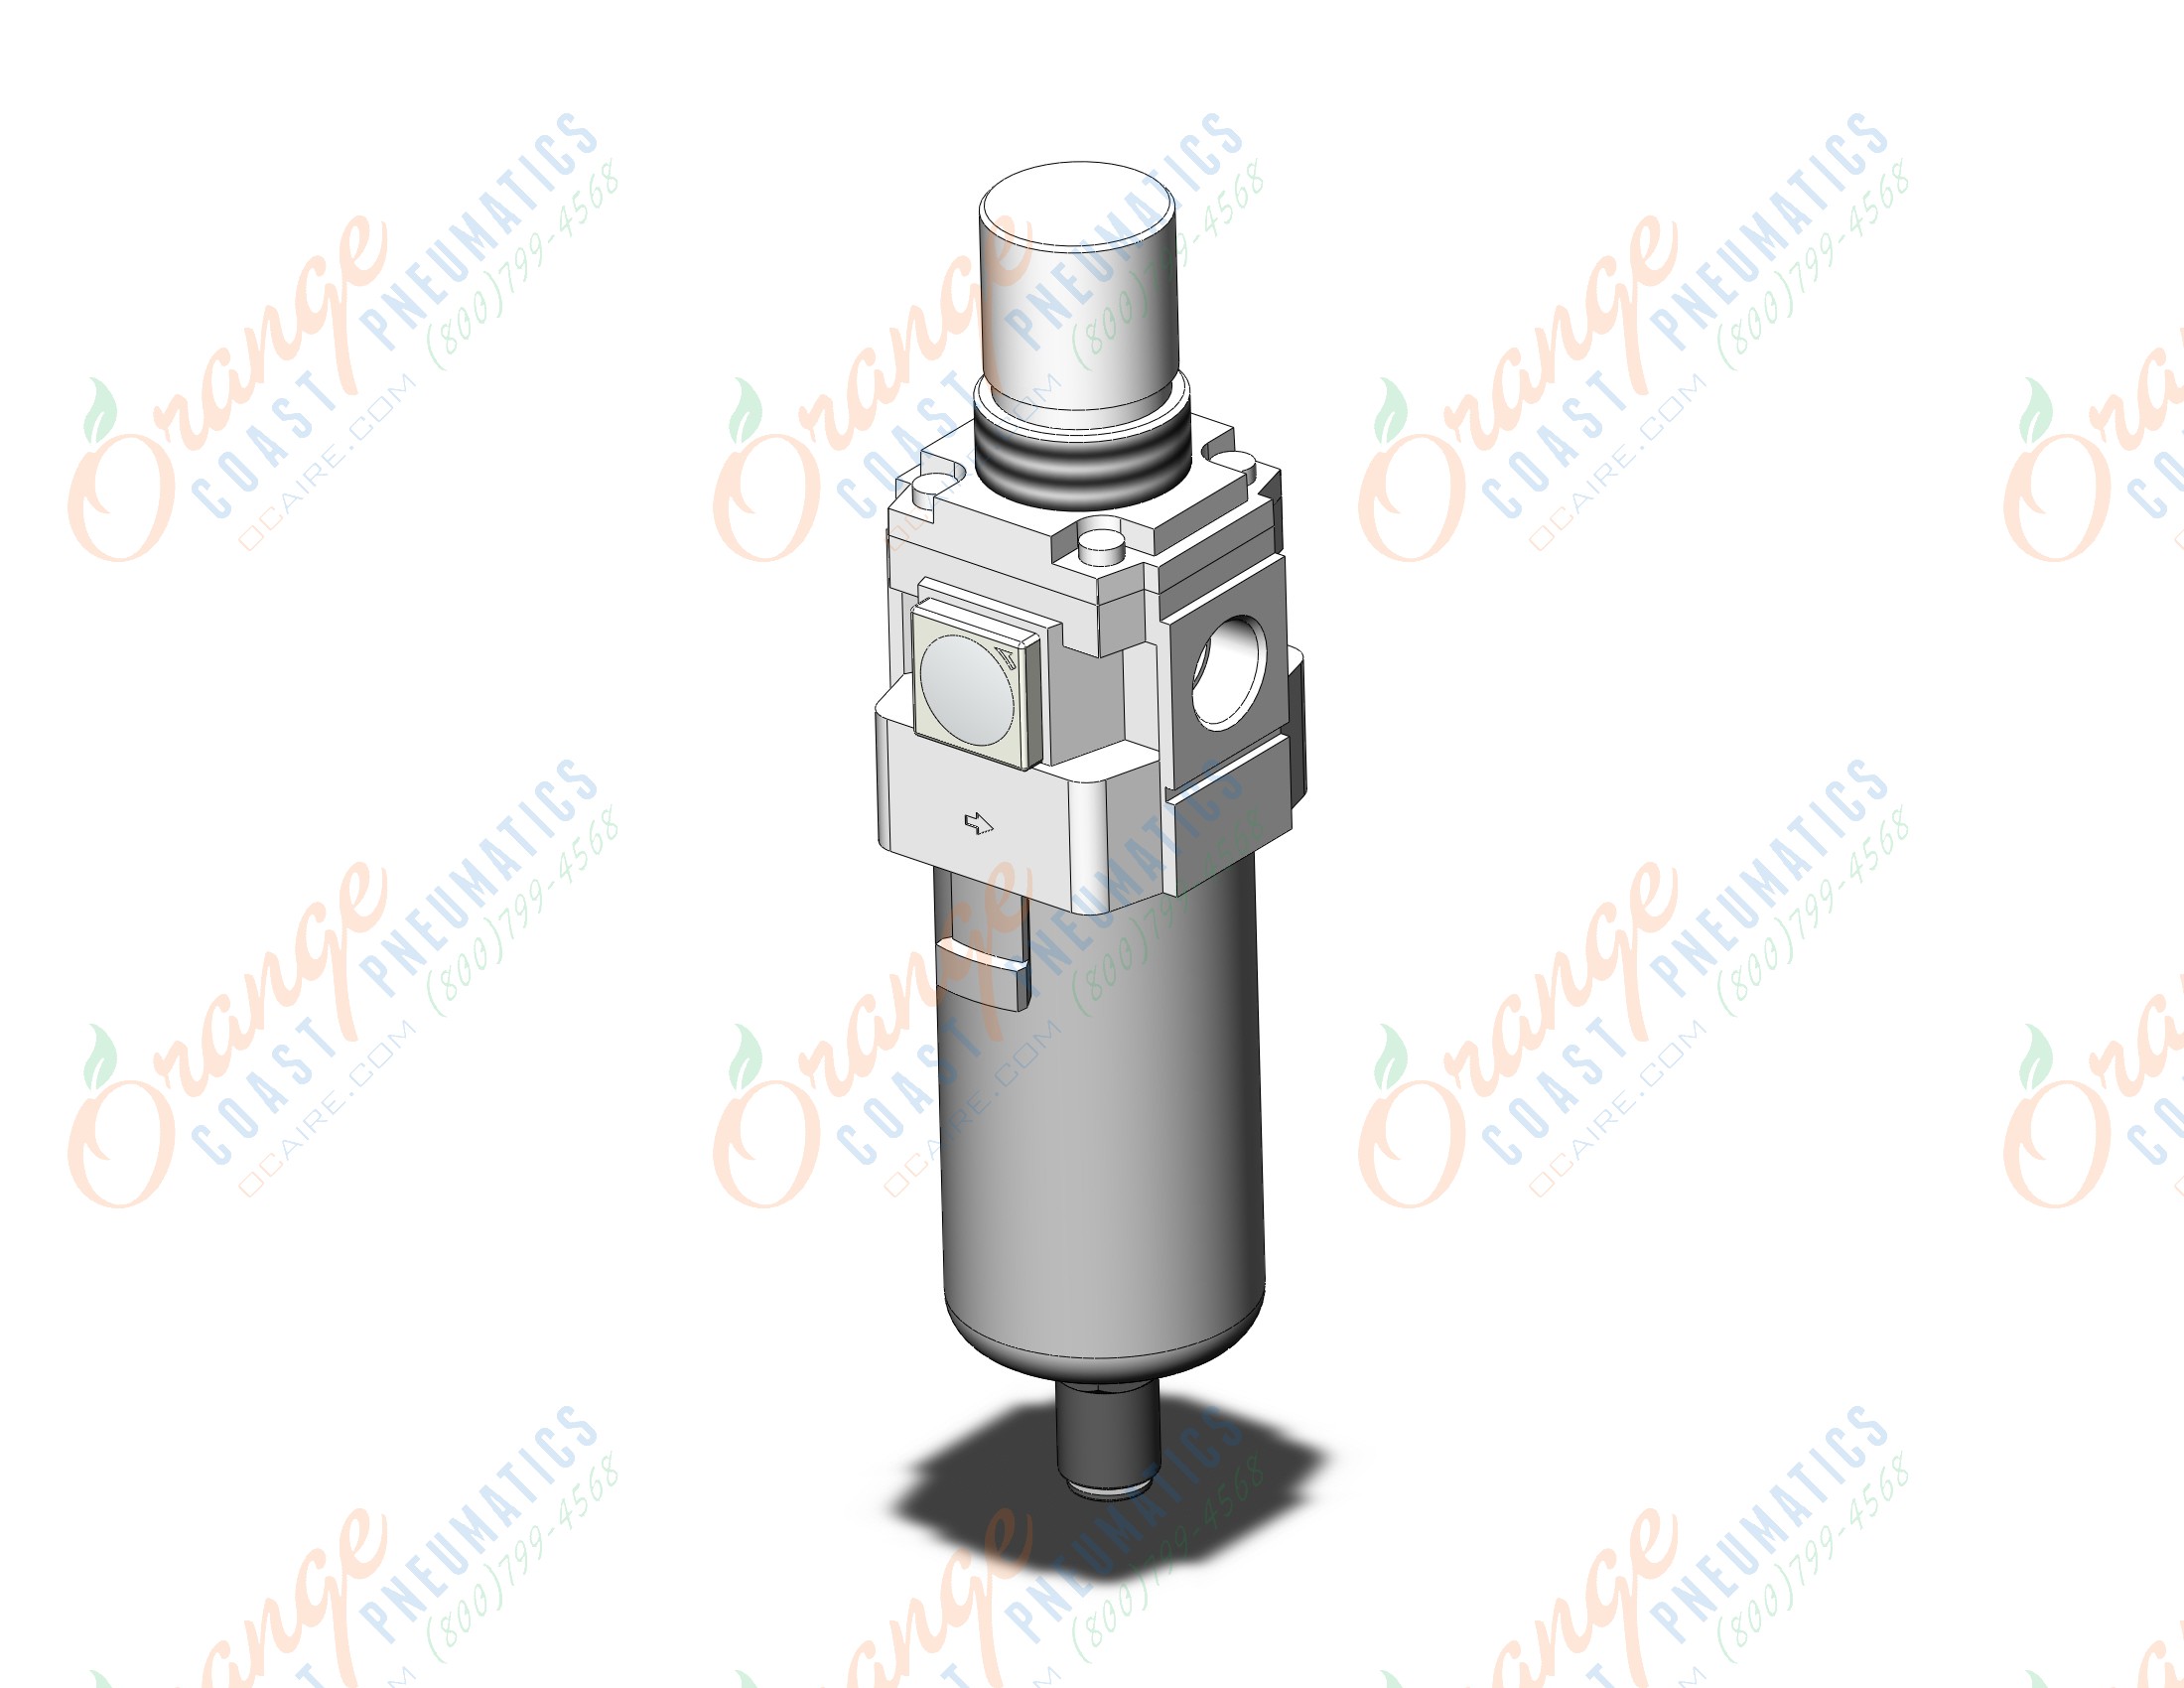 SMC AW40K-04CE2-B filter/regulator, FILTER/REGULATOR, MODULAR F.R.L.